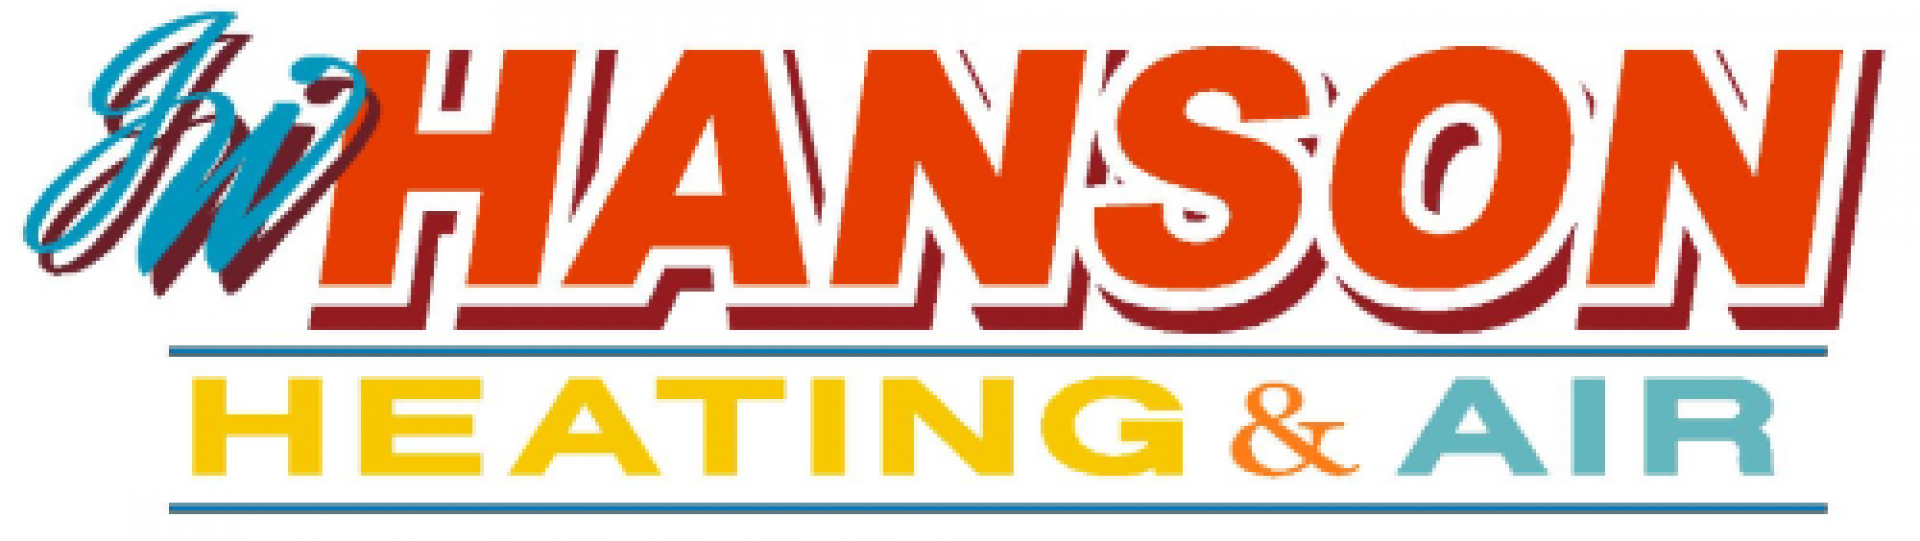 JW Hanson Heating and Air company logo